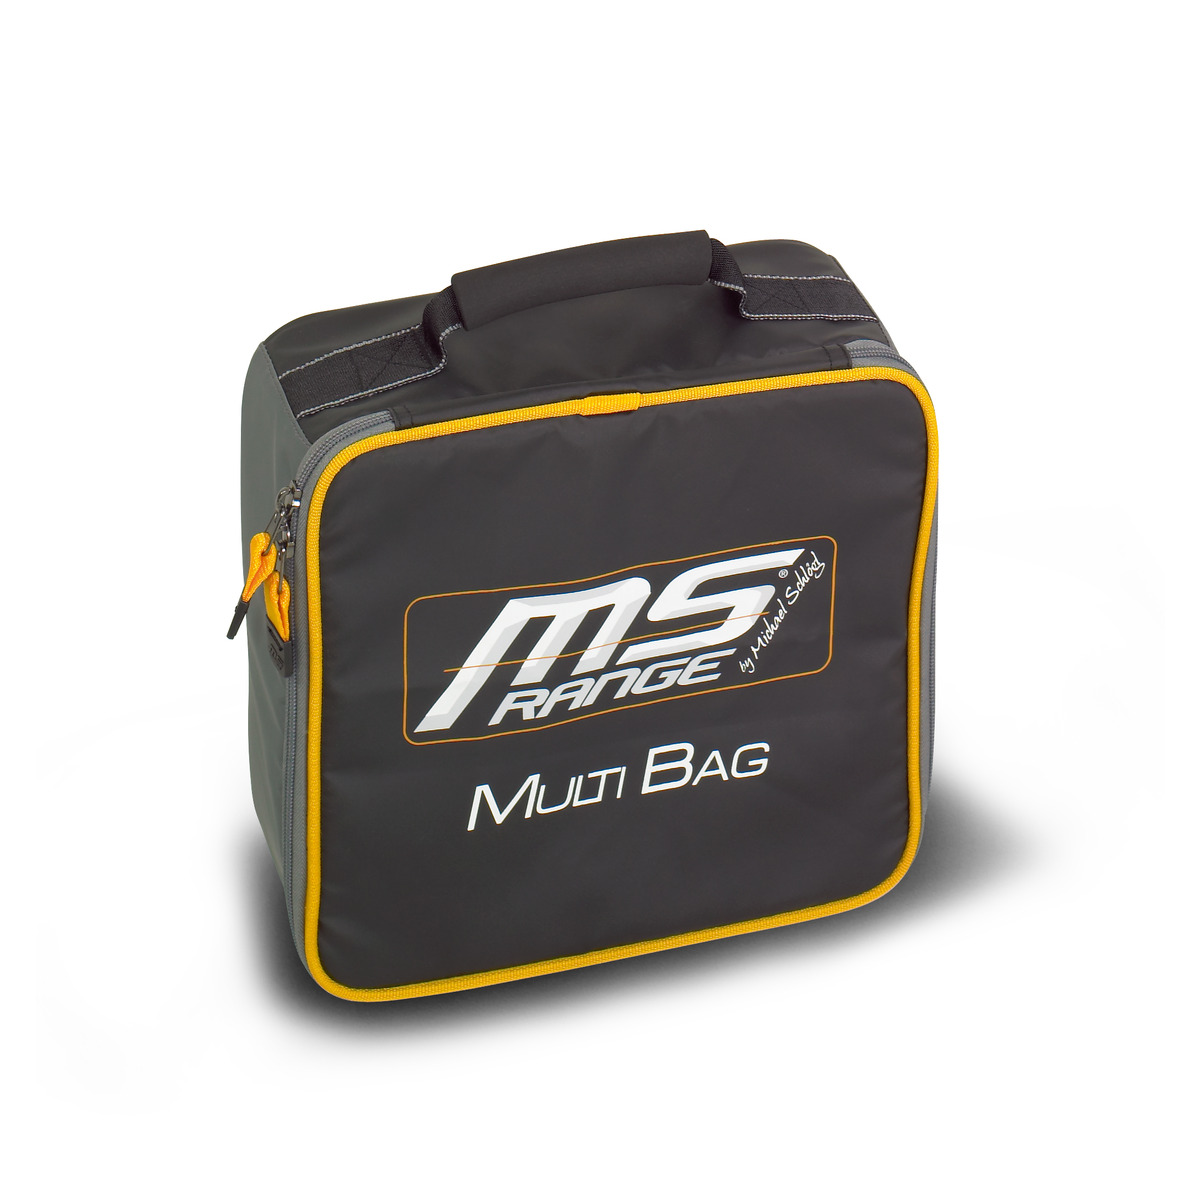 Ms Range  Multi Bag - 